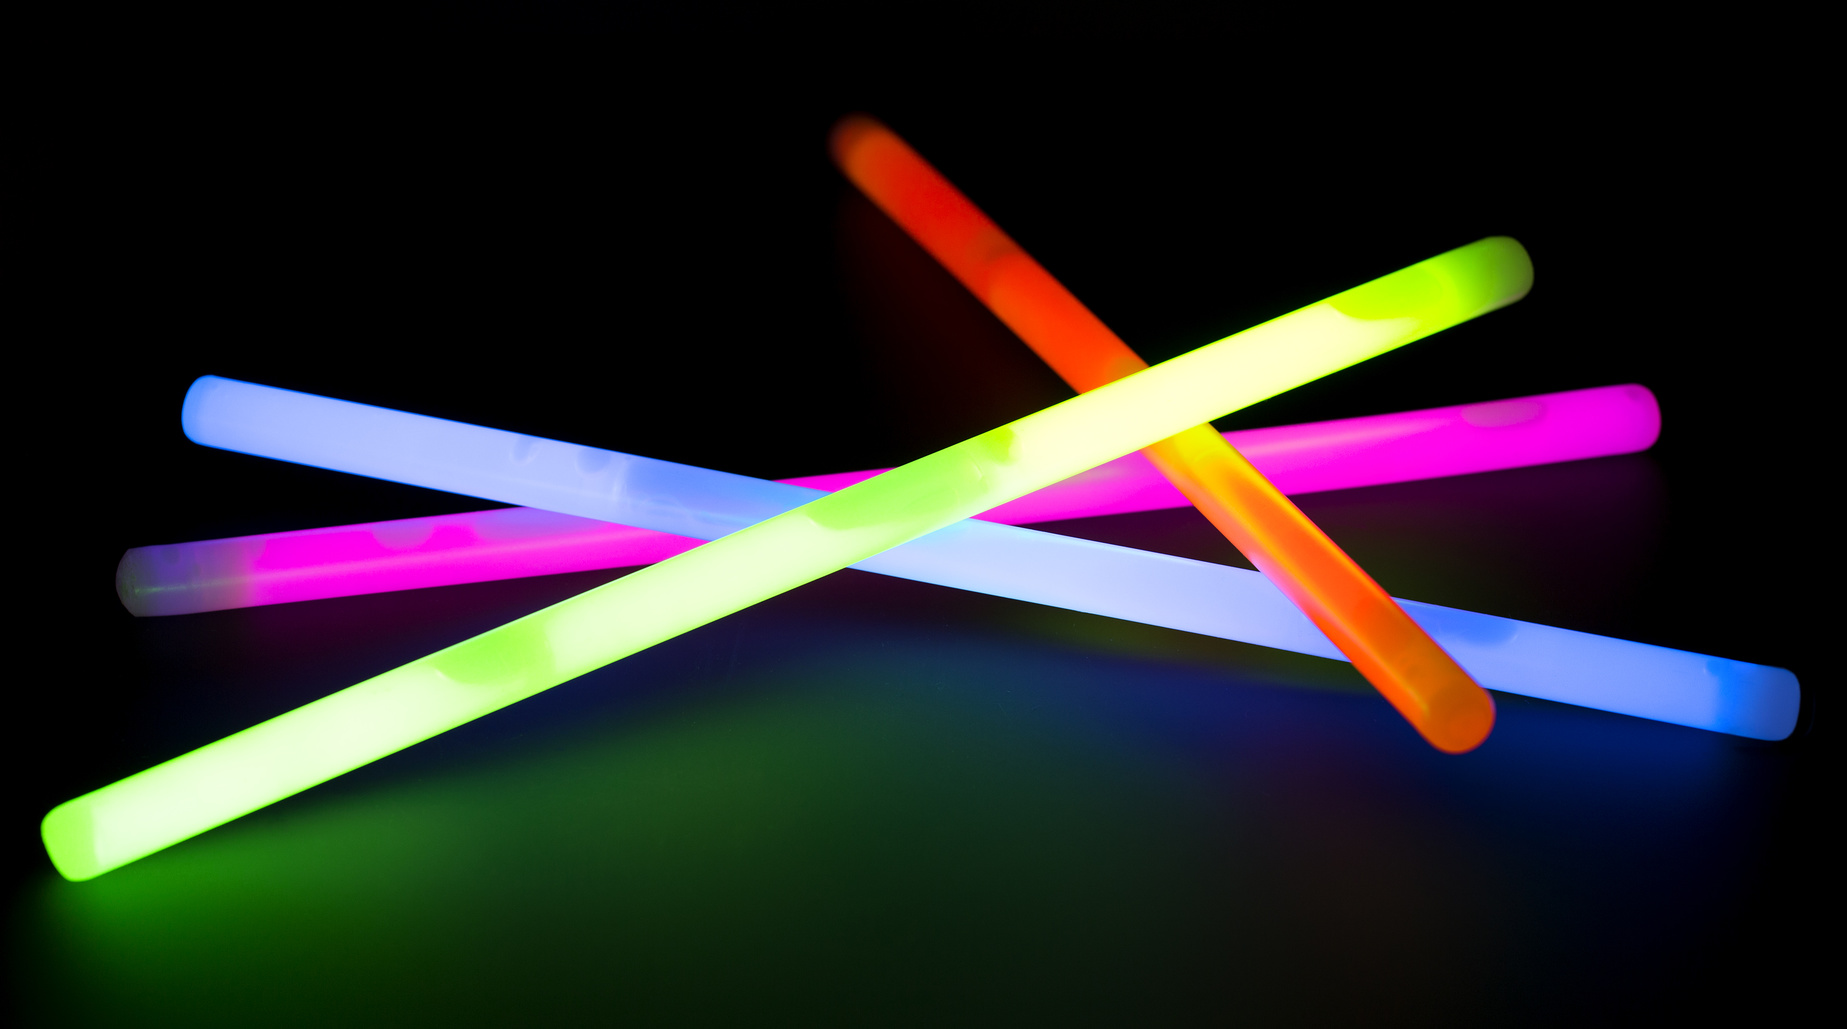 http://experimentexchange.com/wp-content/uploads/2016/06/glow-sticks.jpg